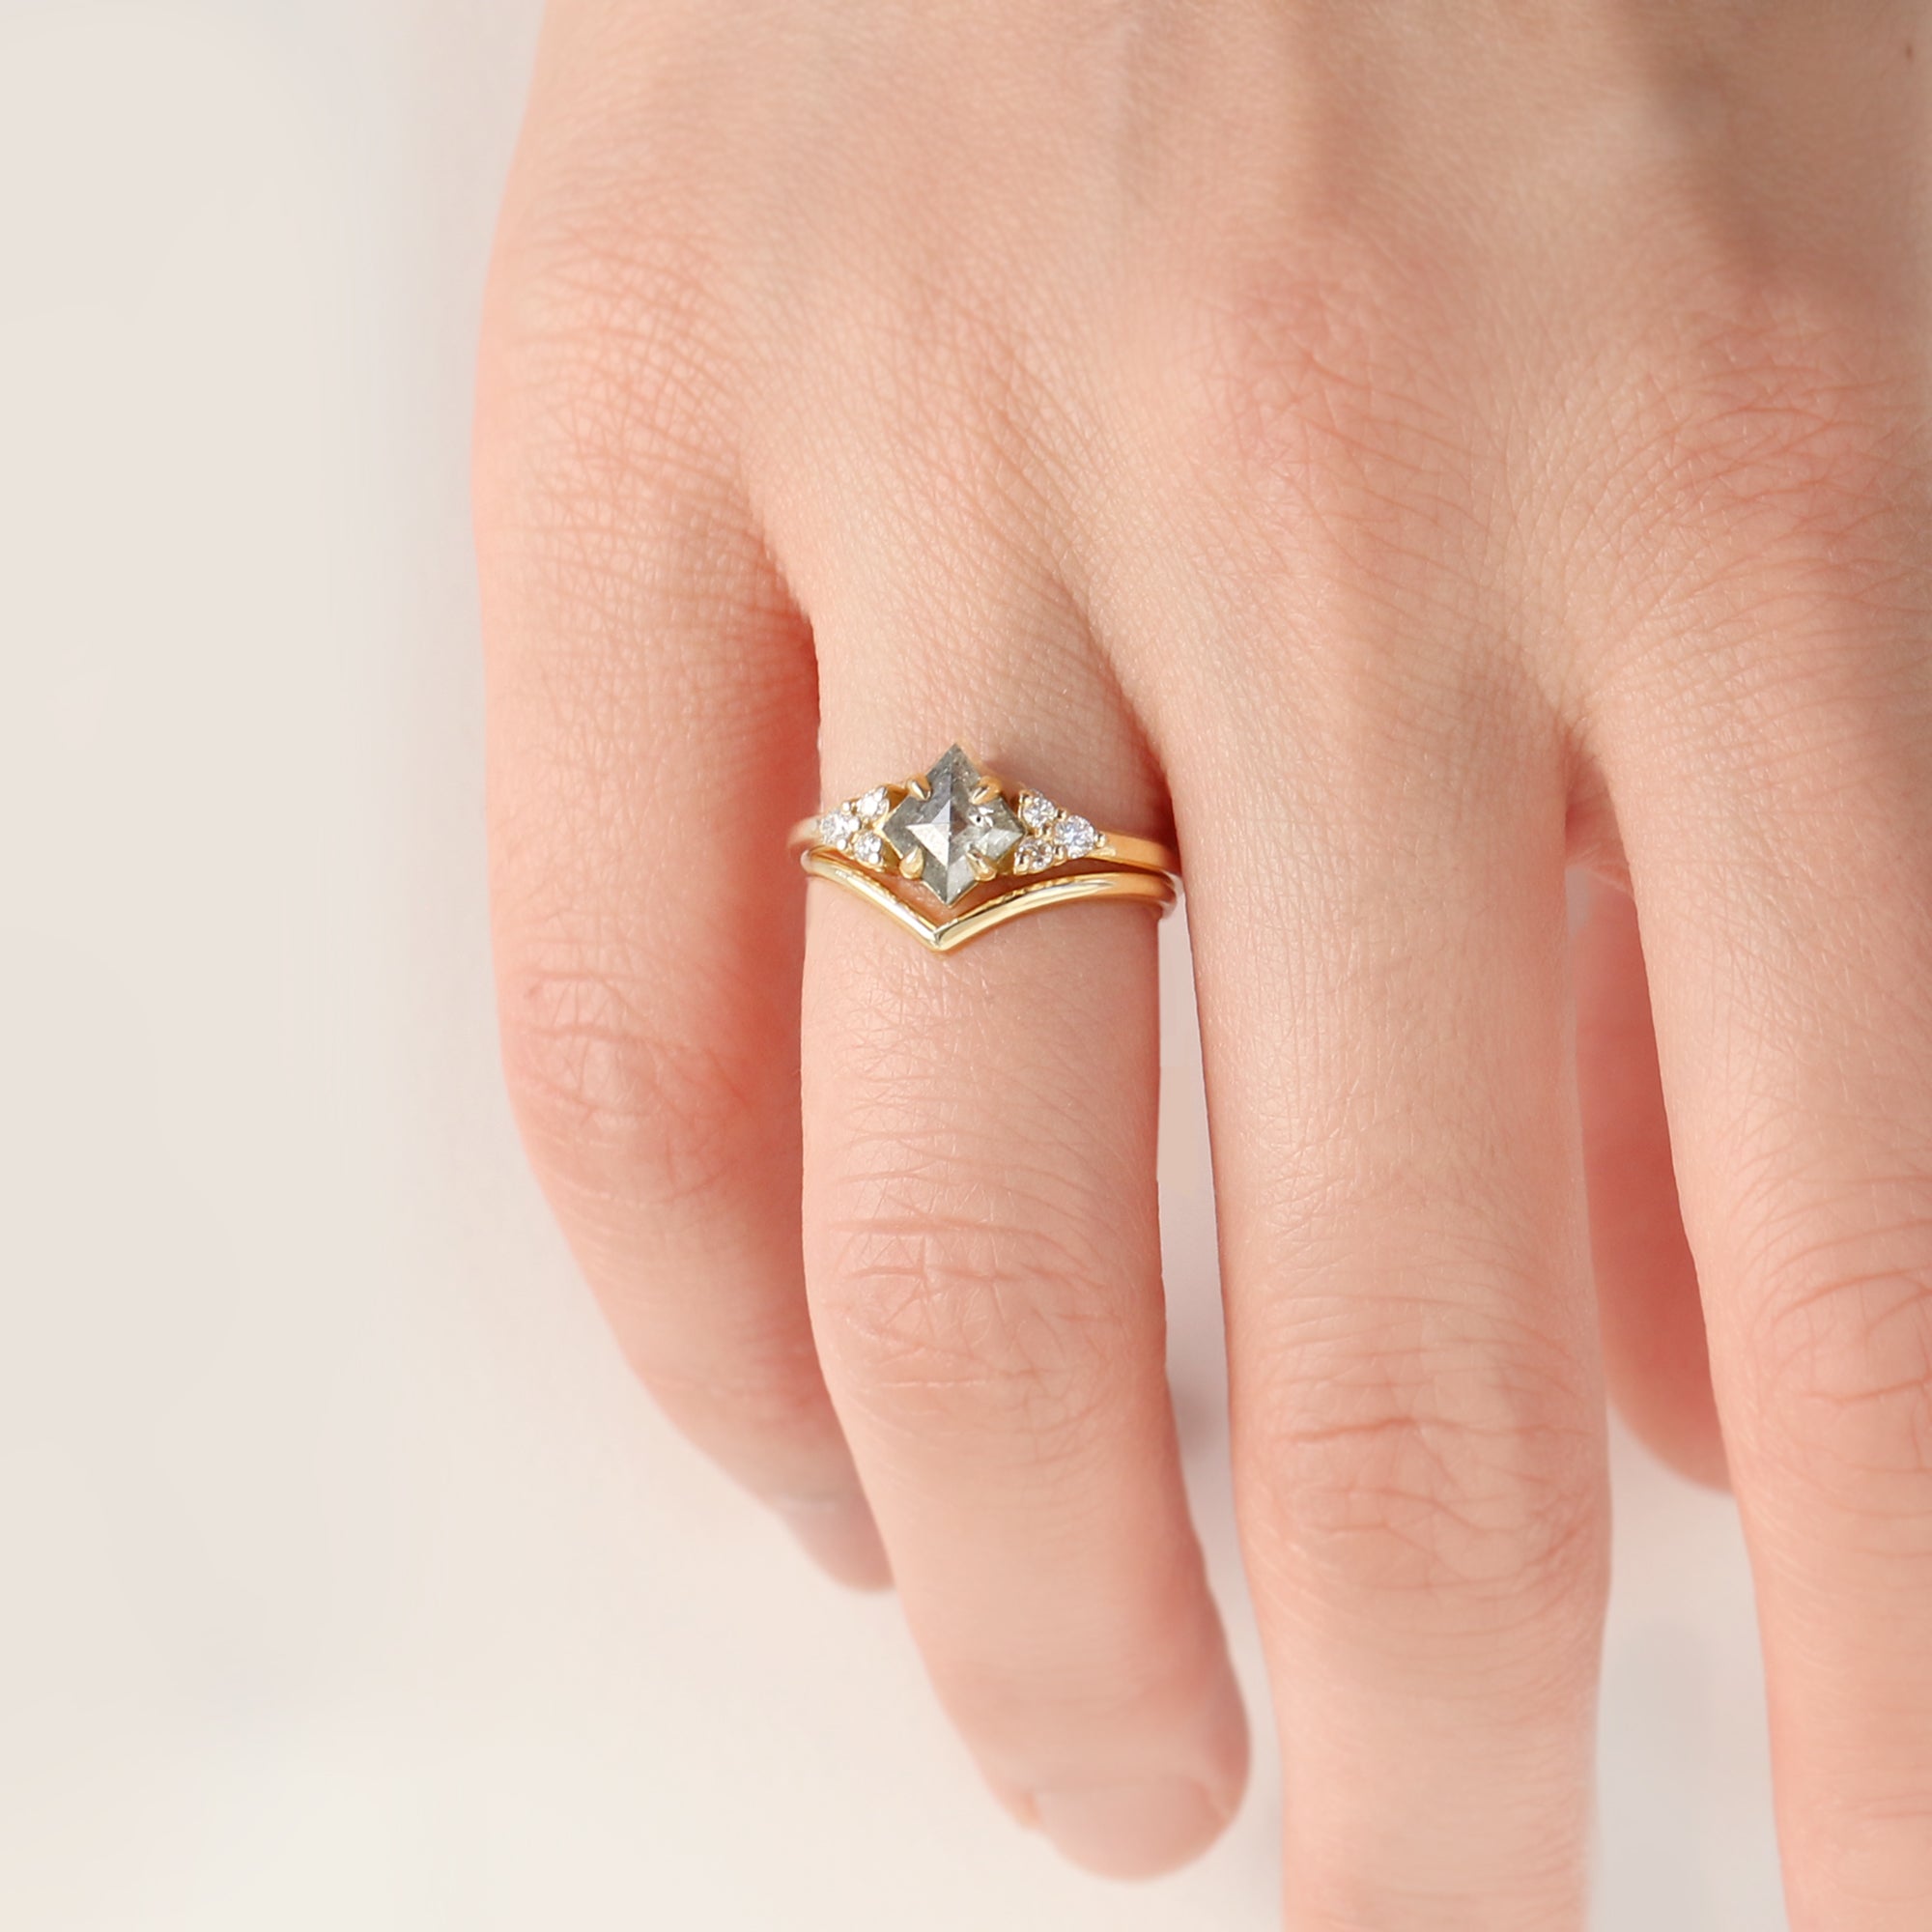 Jamie Park Jewelry - 0.68CTW Kite Cut Salt and Pepper Diamond Ring 